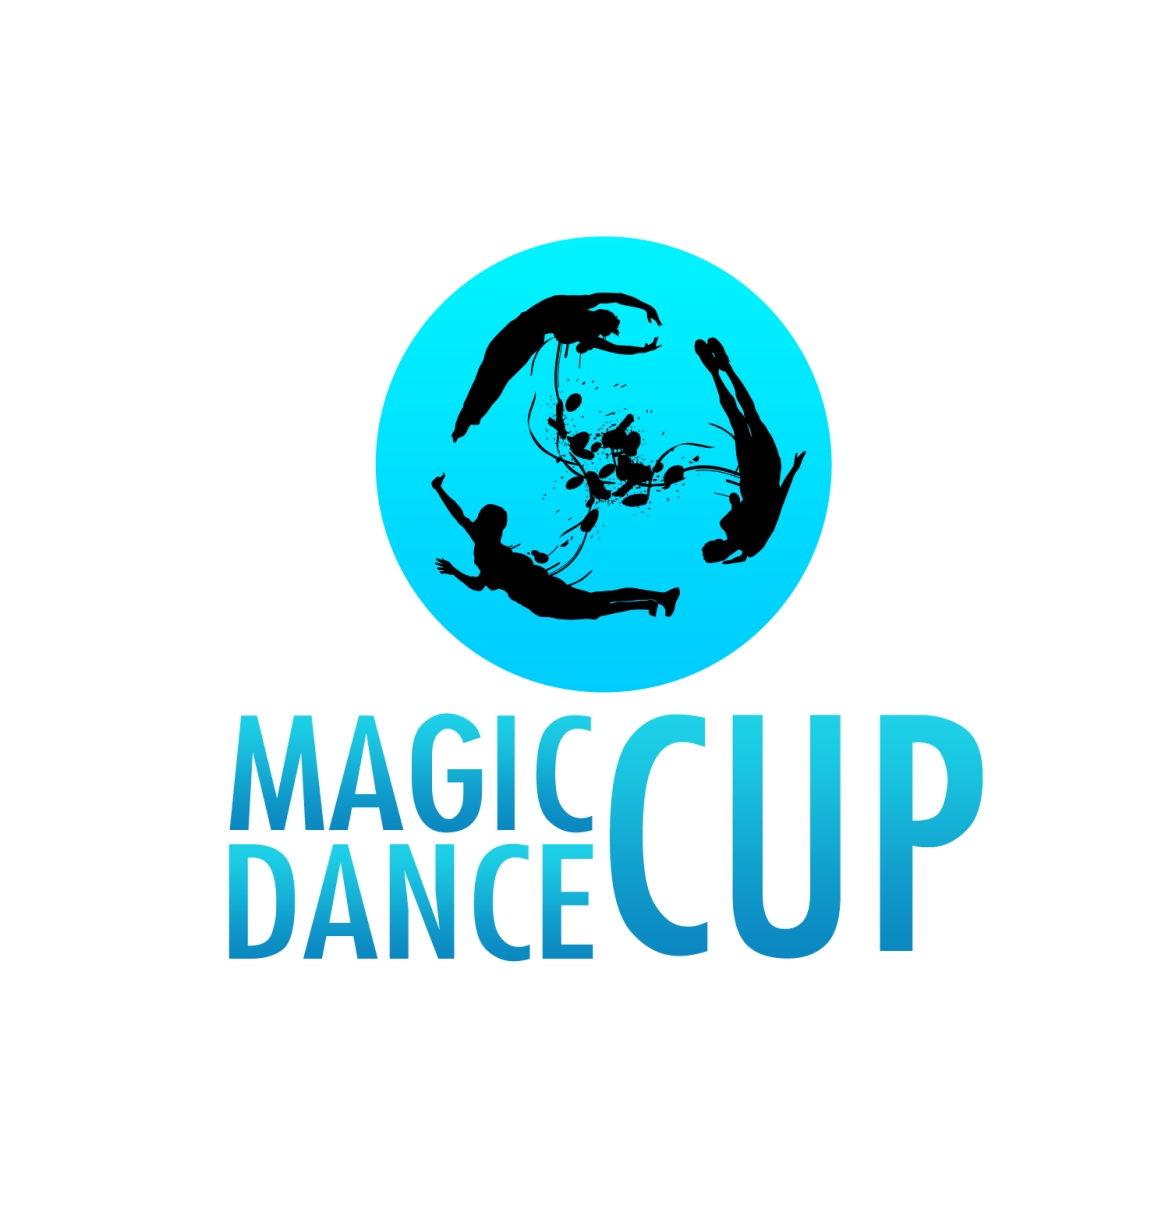 Magic Dance CUP